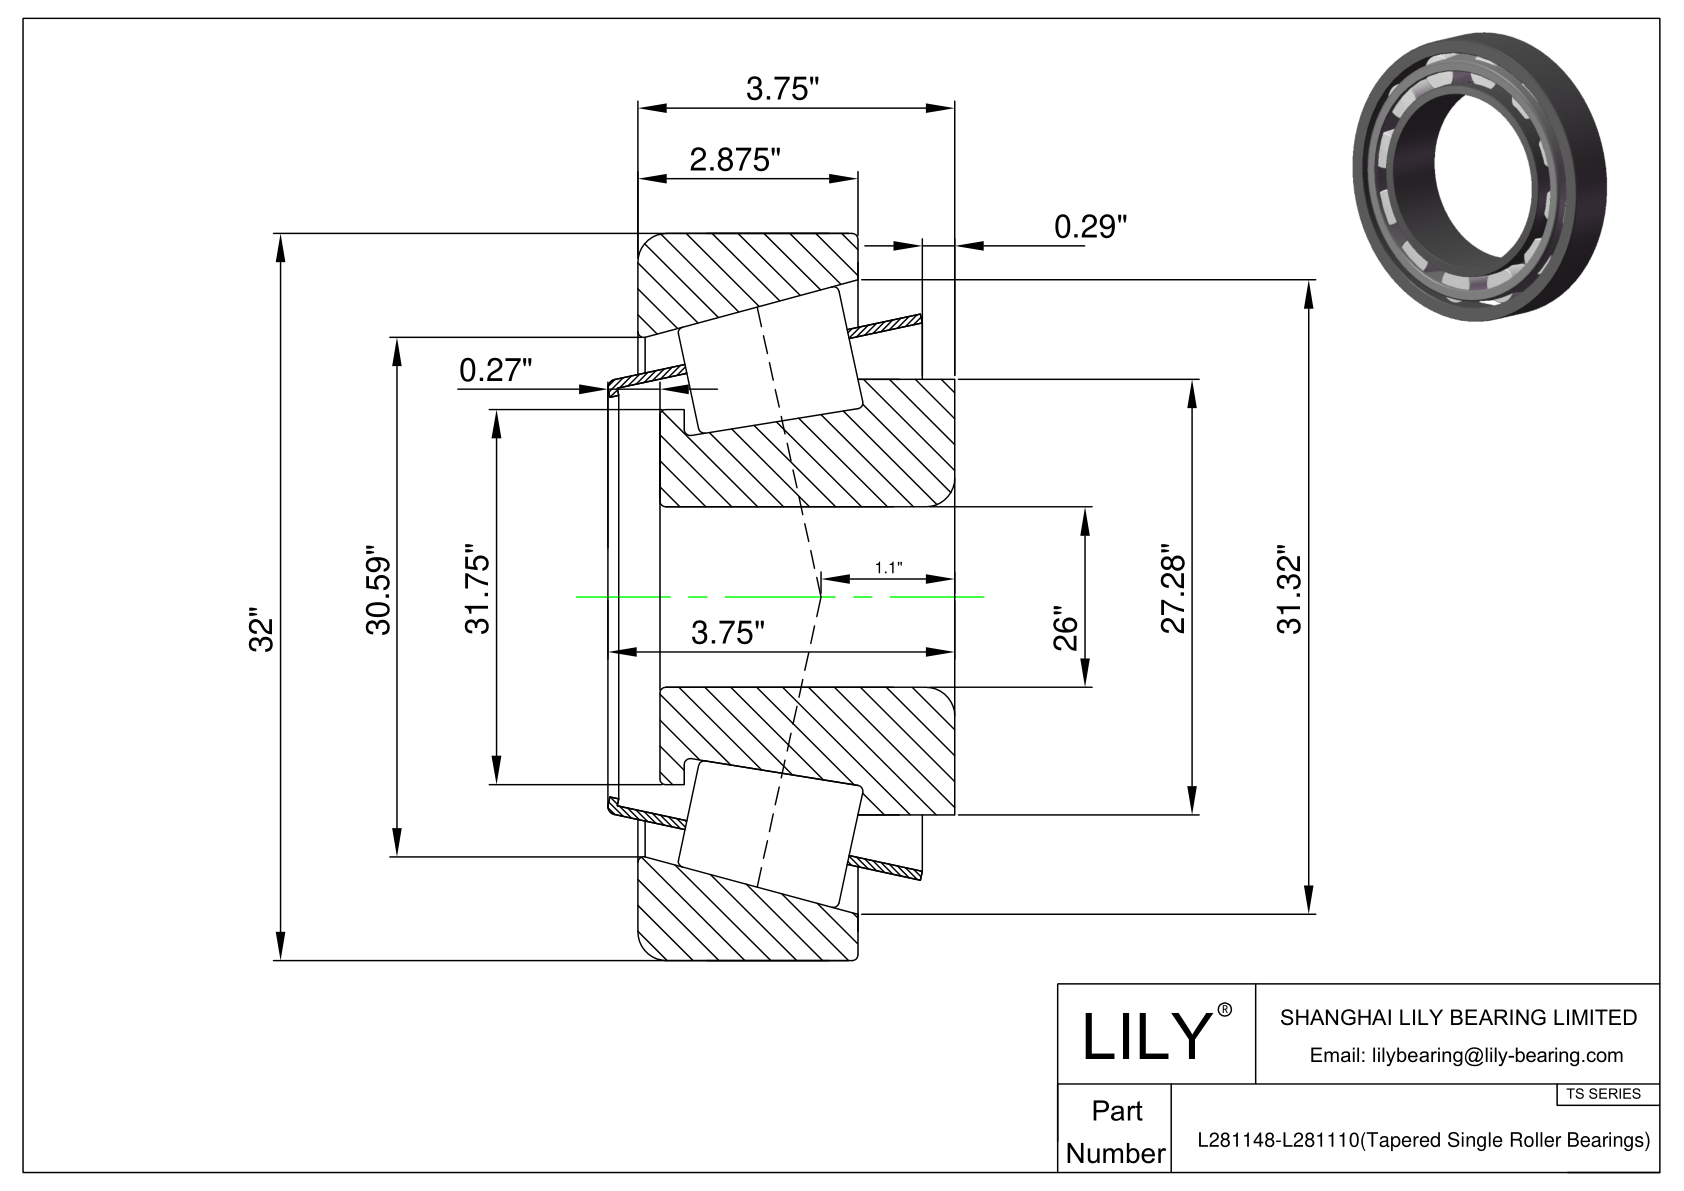 L281148-L281110 TS系列(圆锥单滚子轴承)(英制) CAD图形